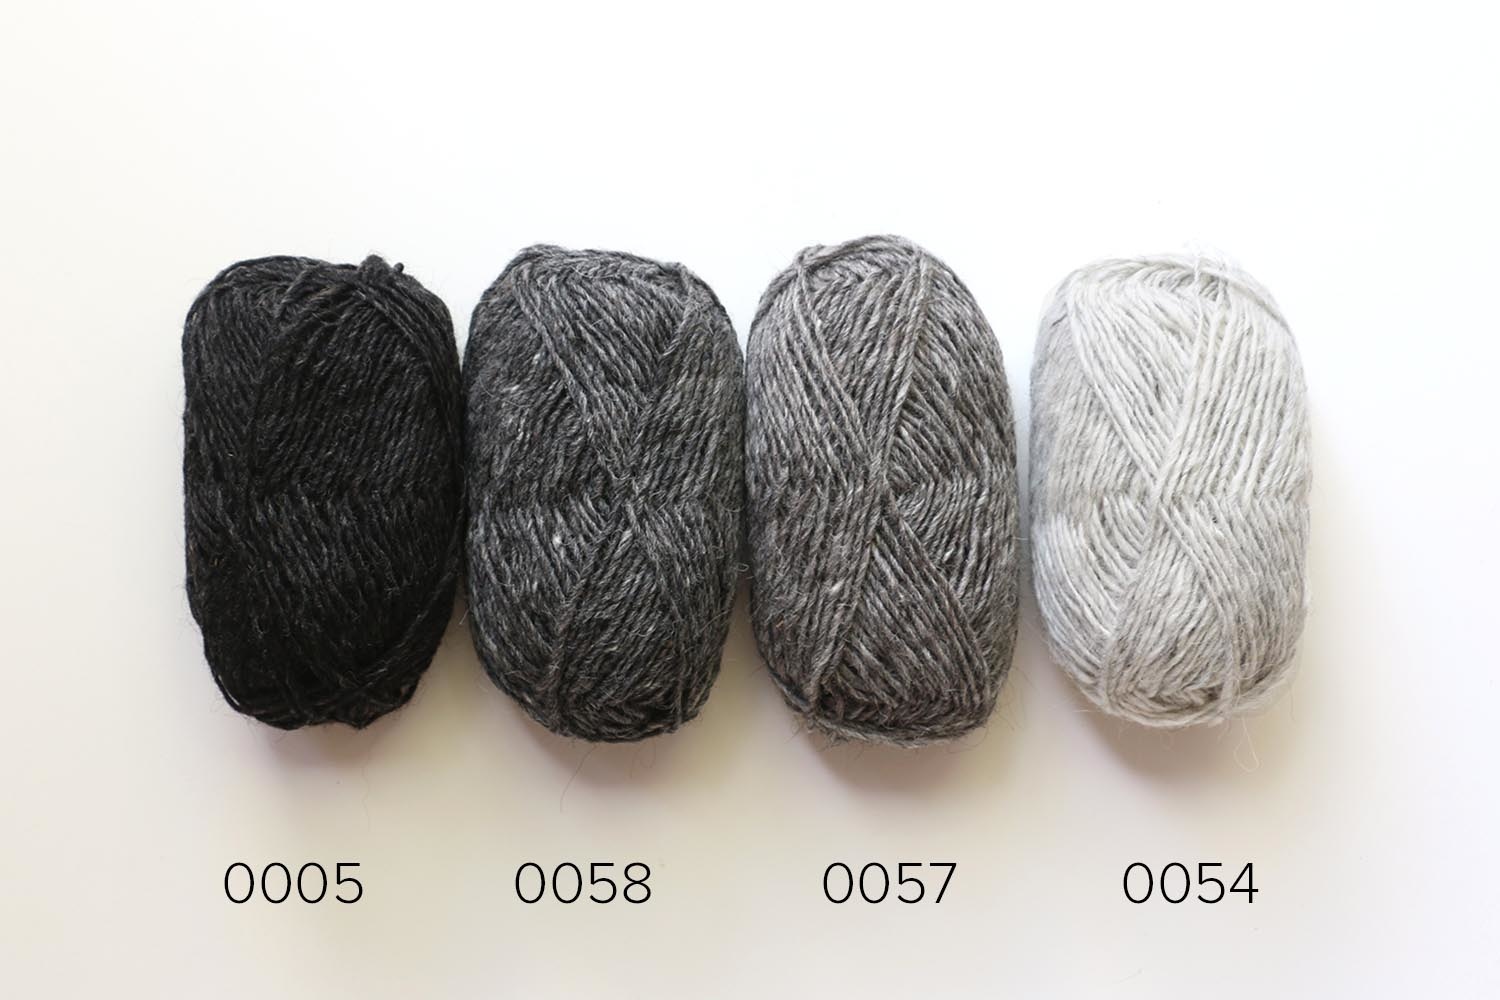 knitting needles - woolinspires